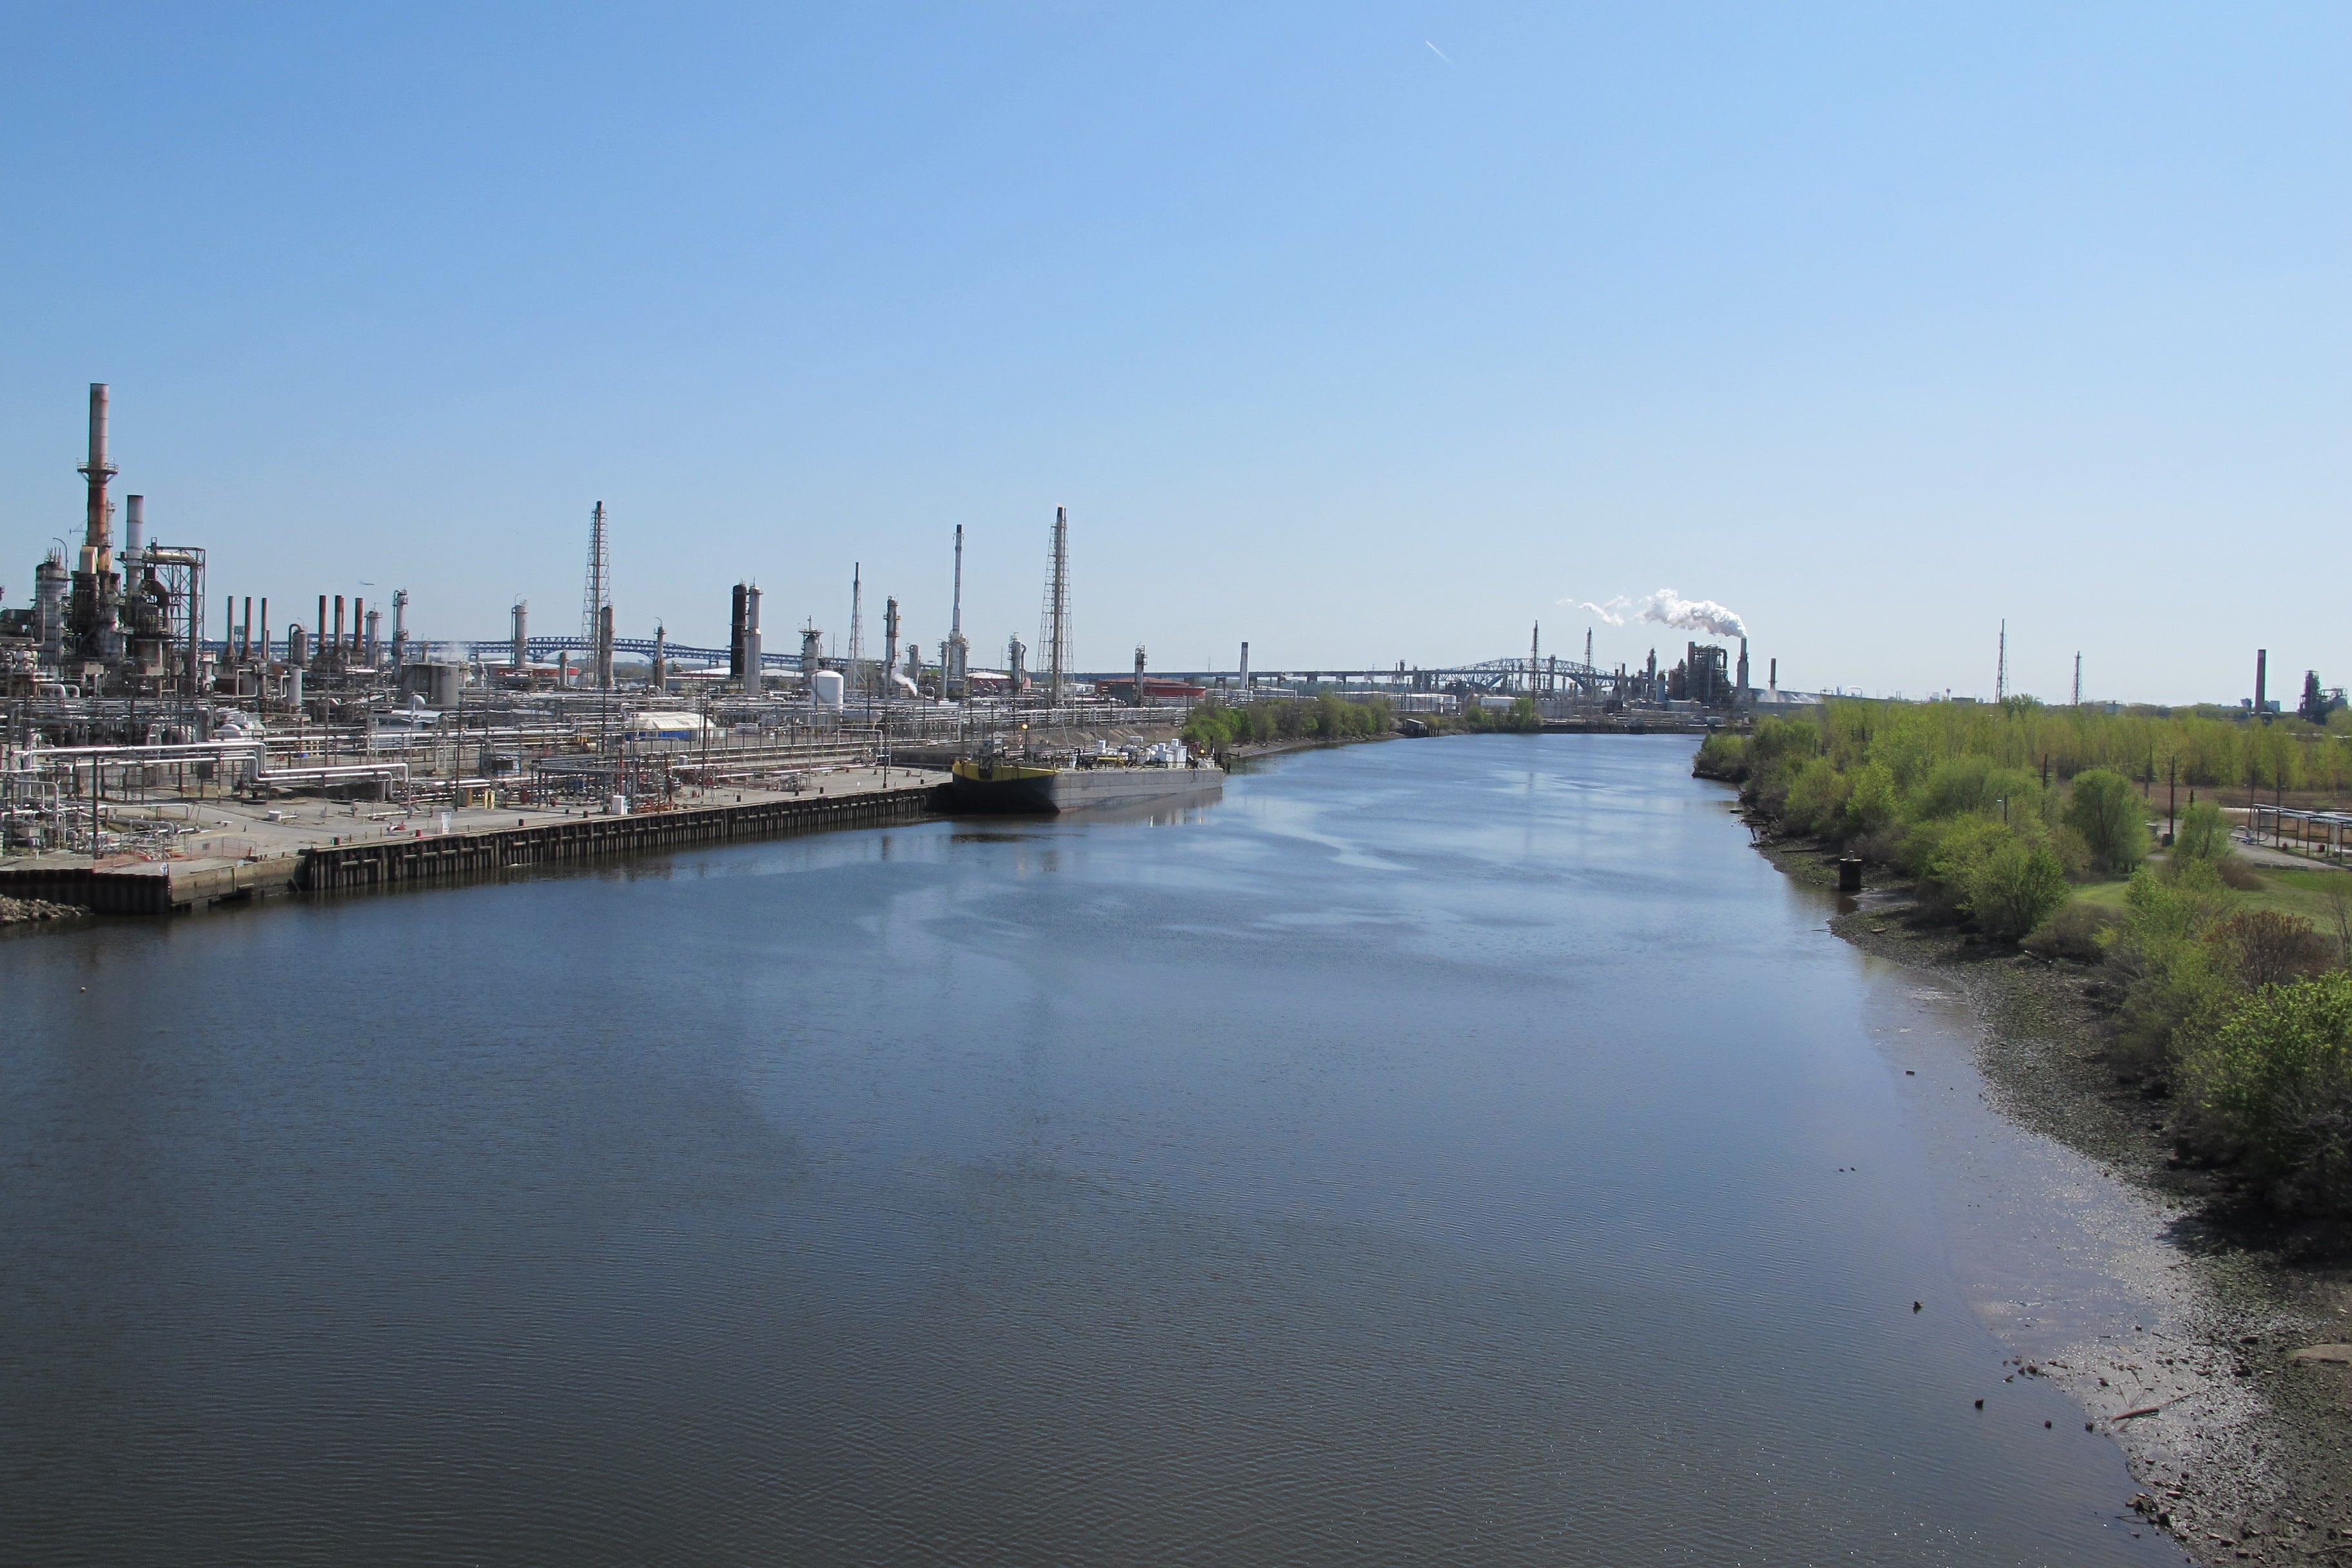 South along the Schuylkill: Part of Sunoco's Philadelphia refinery as seen from the Passyunk Avenue Bridge.